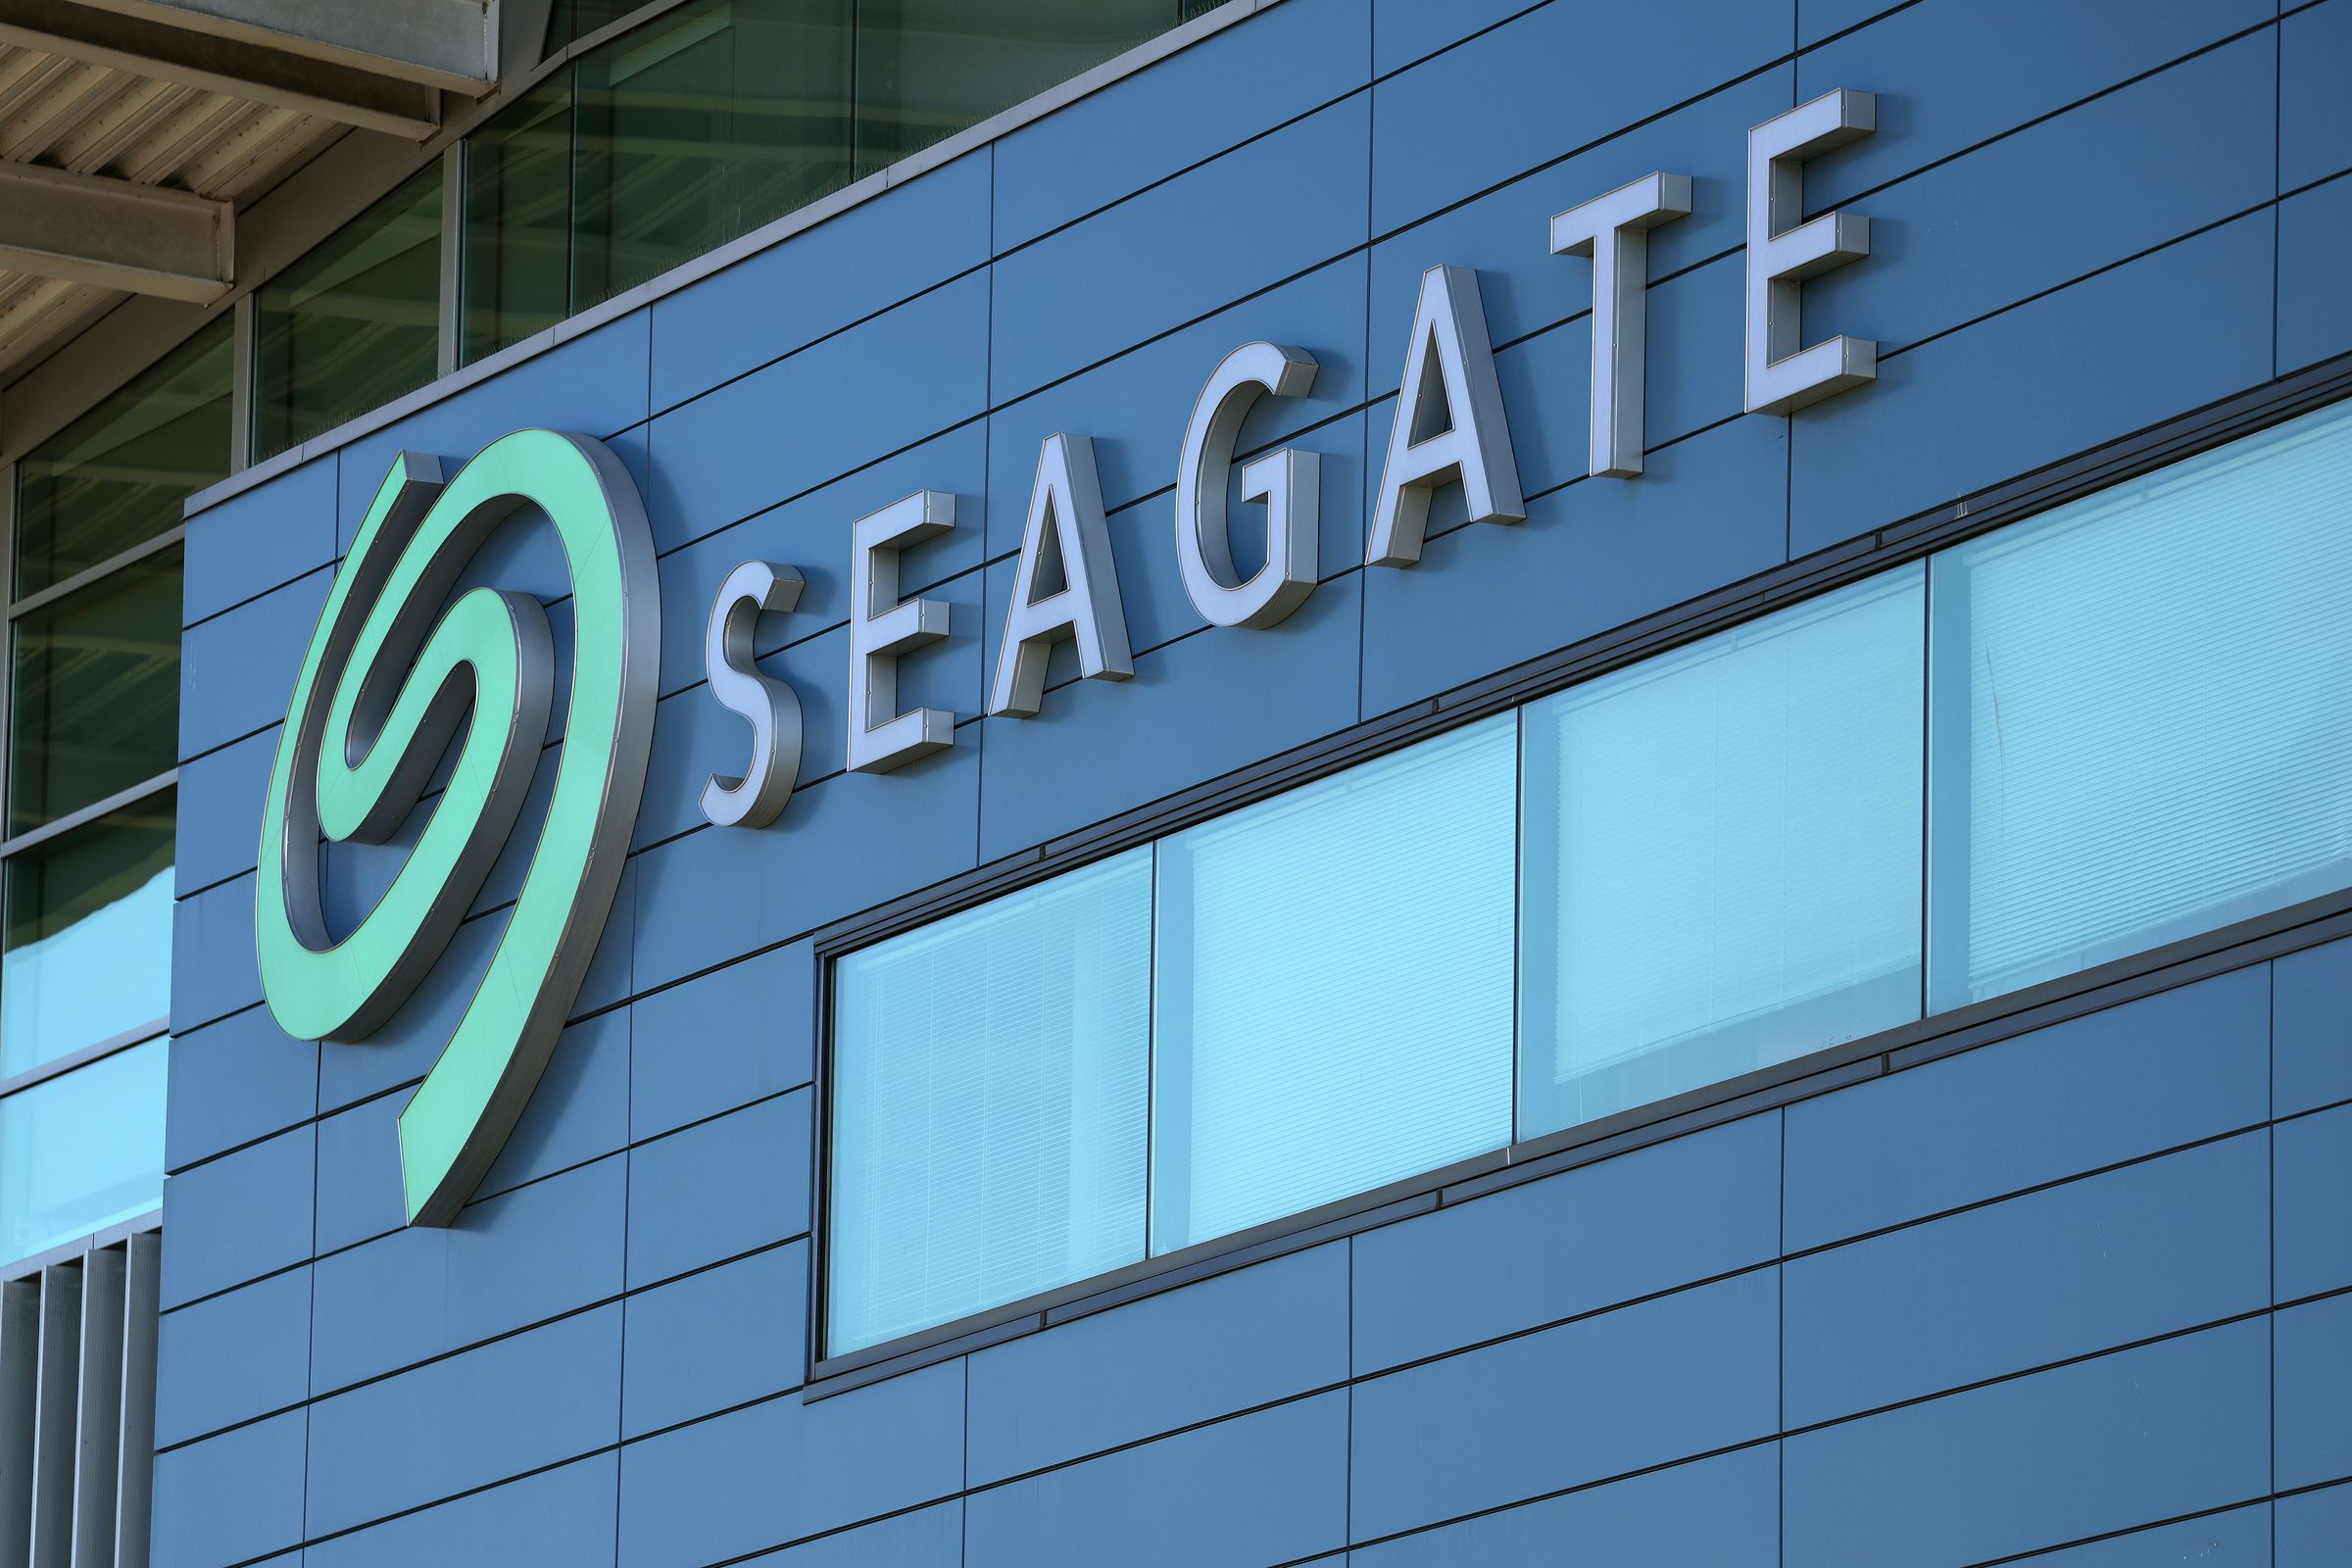 Hard Drive Maker Seagate Announces Its Cutting 3,000 Jobs